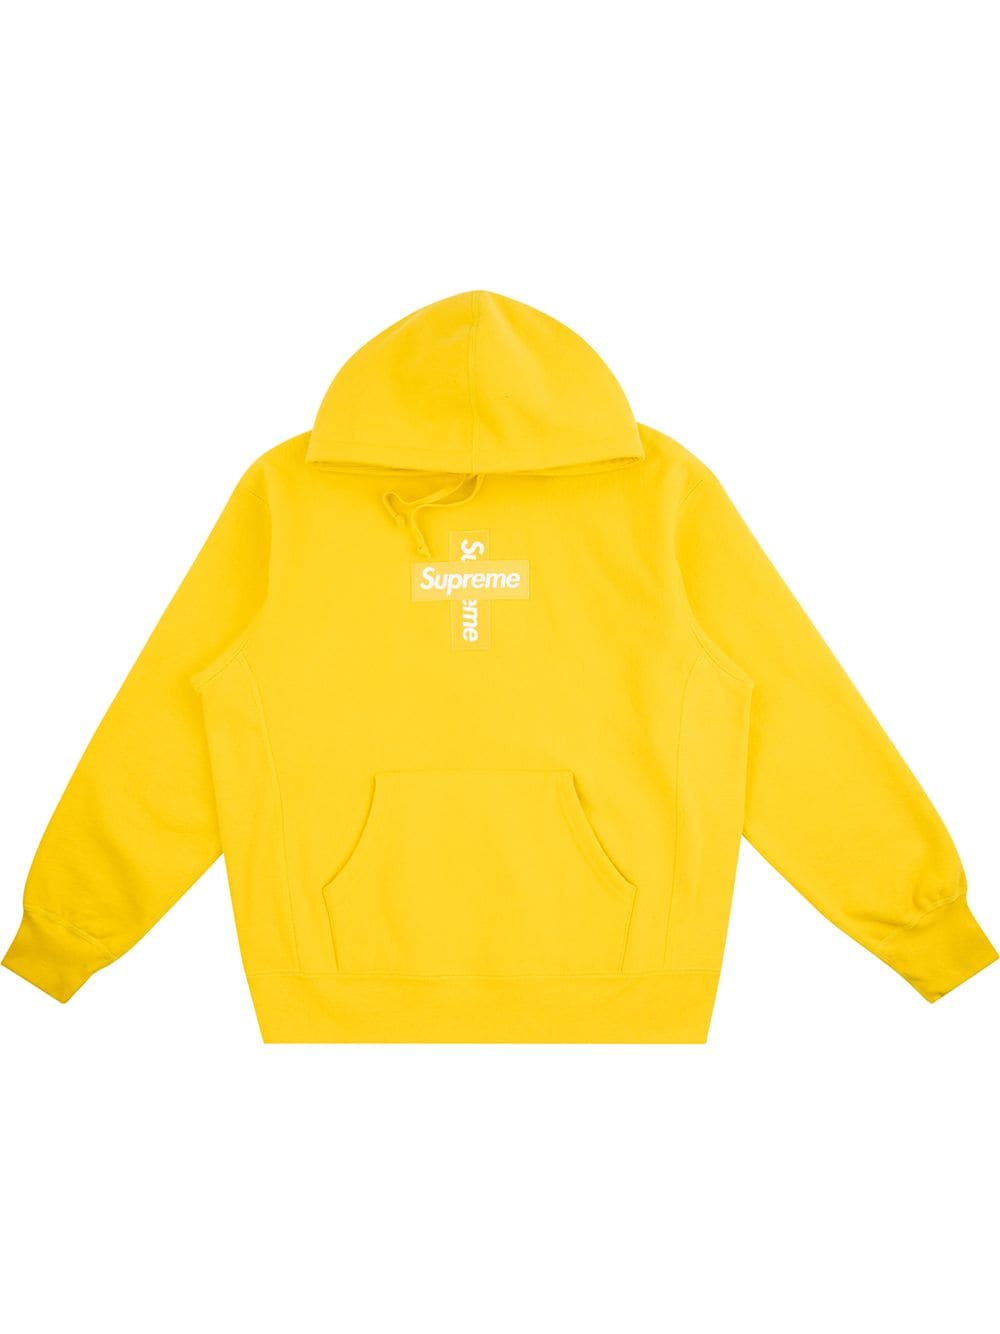 Supreme cross box logo hoodie - Yellow von Supreme